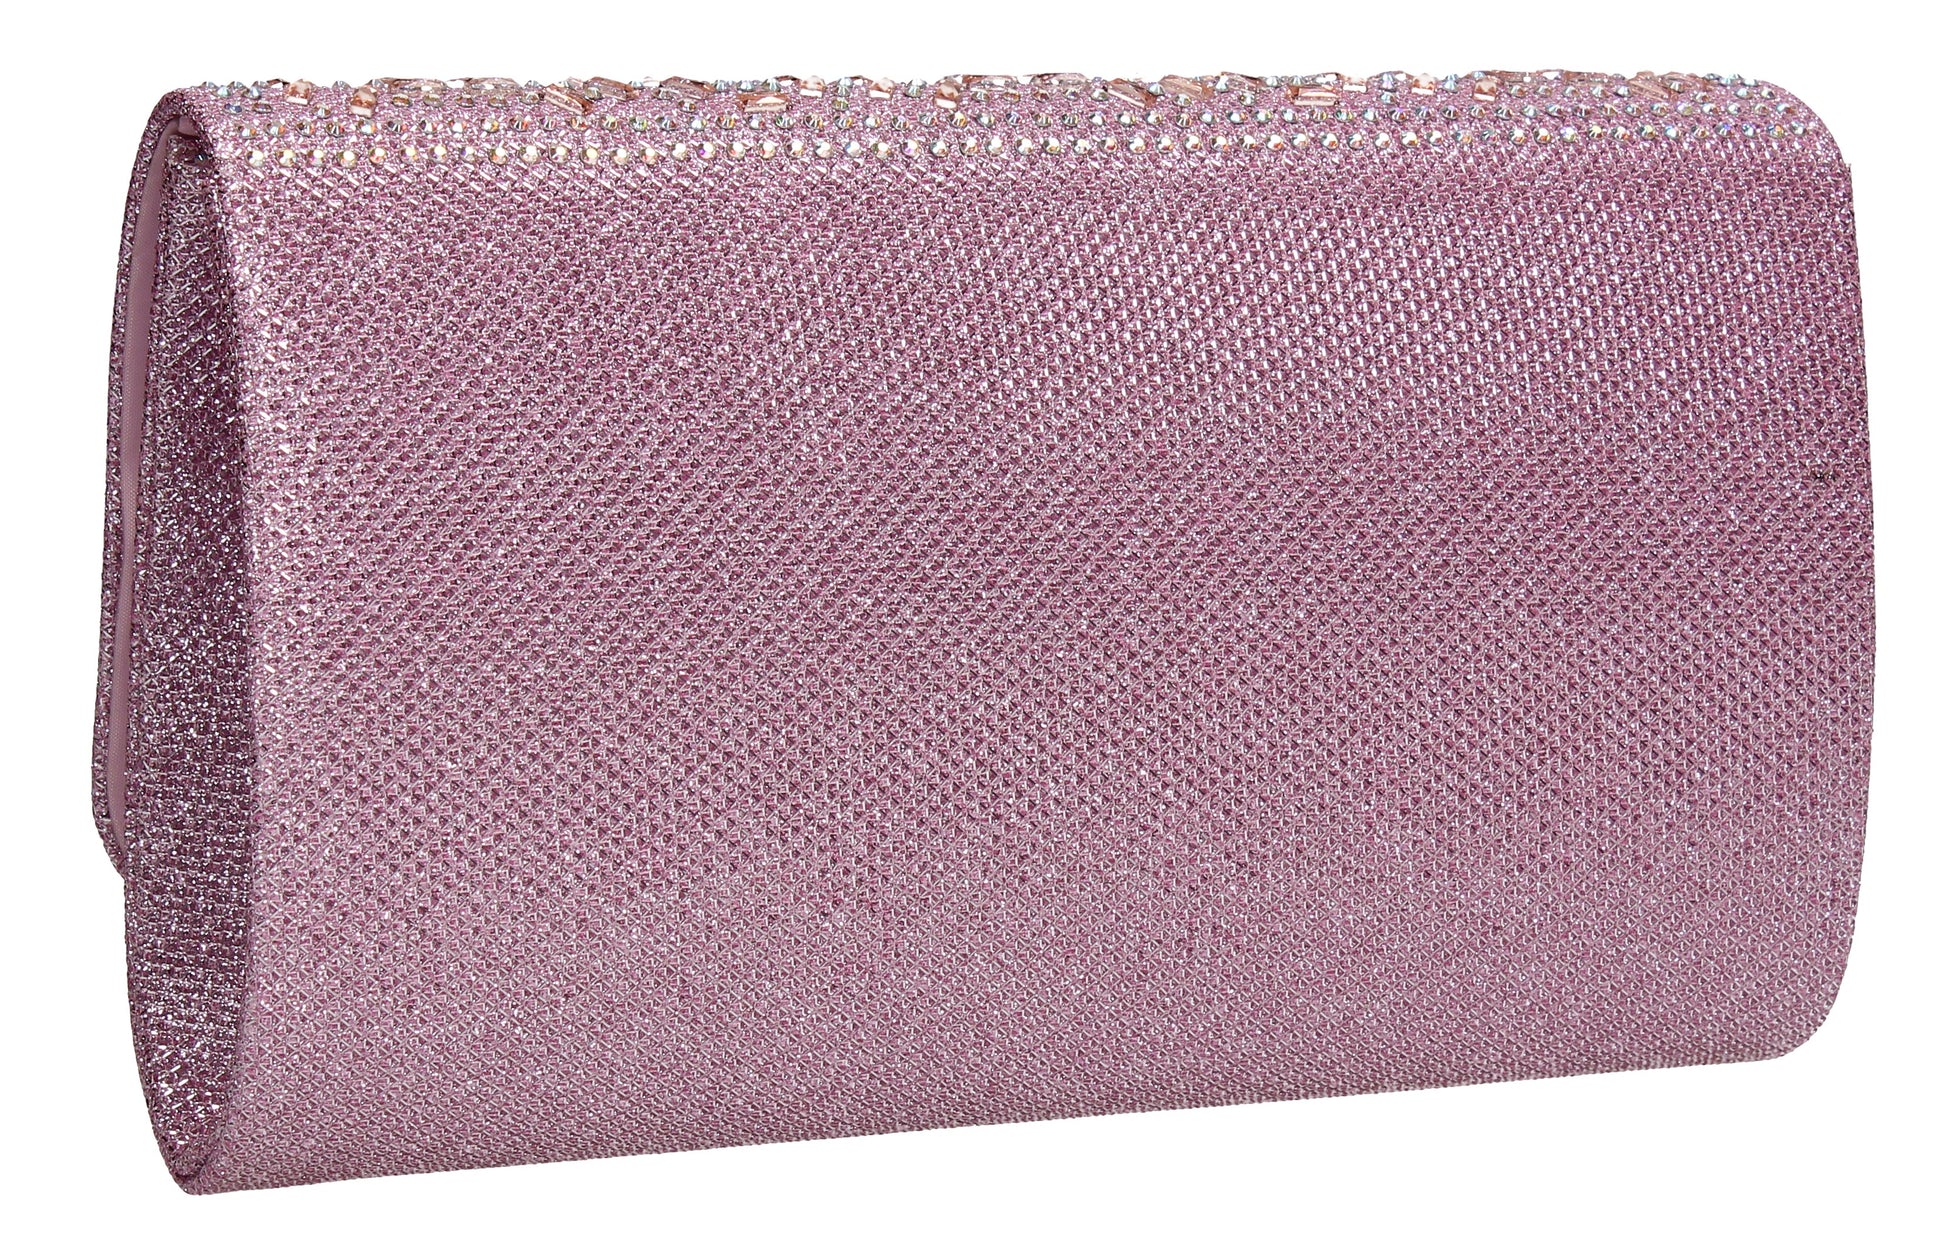 SWANKYSWANS Sophie Diamante Clutch Bag Pink Cute Cheap Clutch Bag For Weddings School and Work